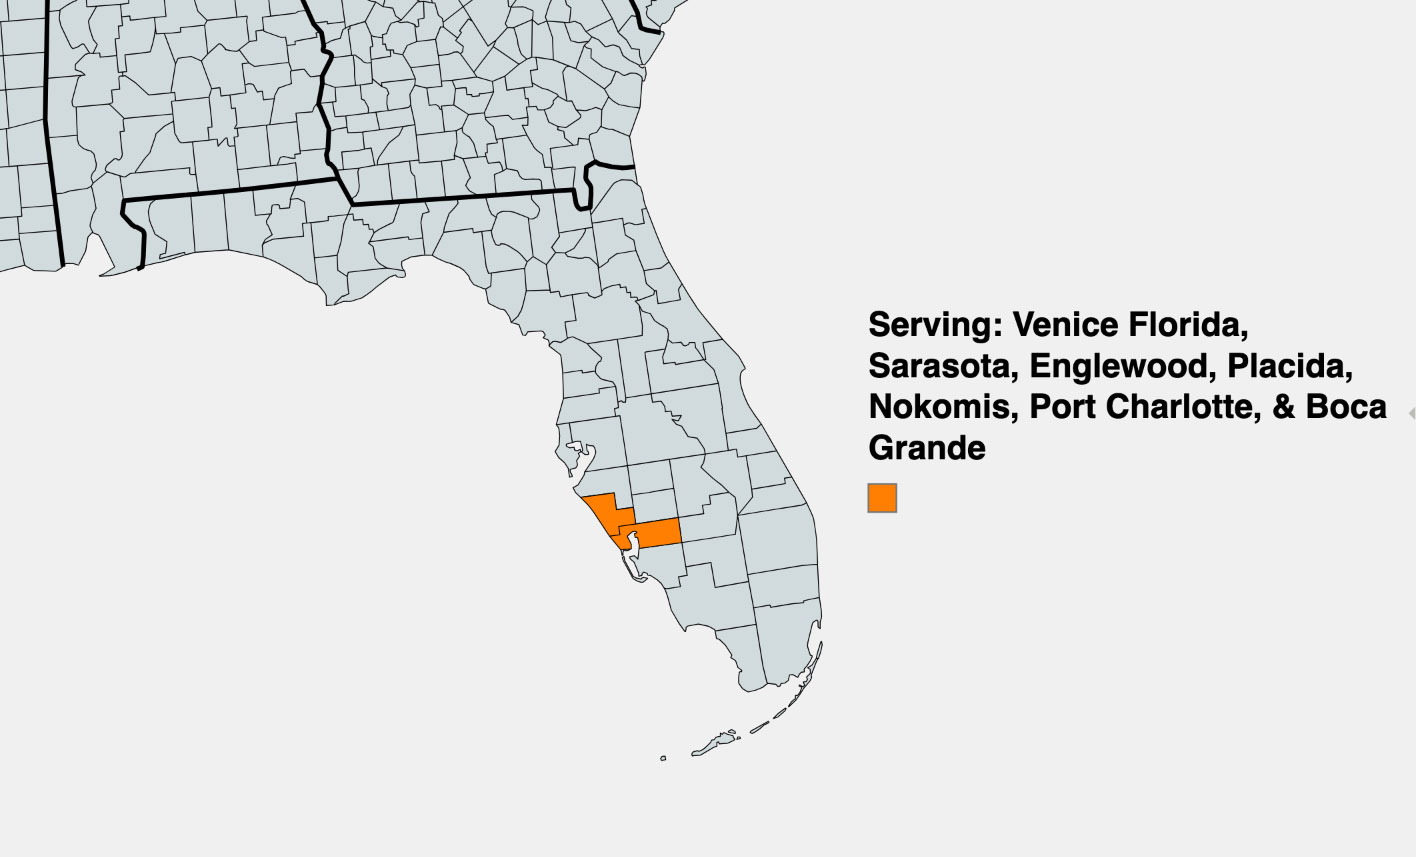 Serving Venice Florida, Sarasota Florida, Nokomis Florida, Port Charlotte, Englewood Florida, Placida Florida, Boca Grande